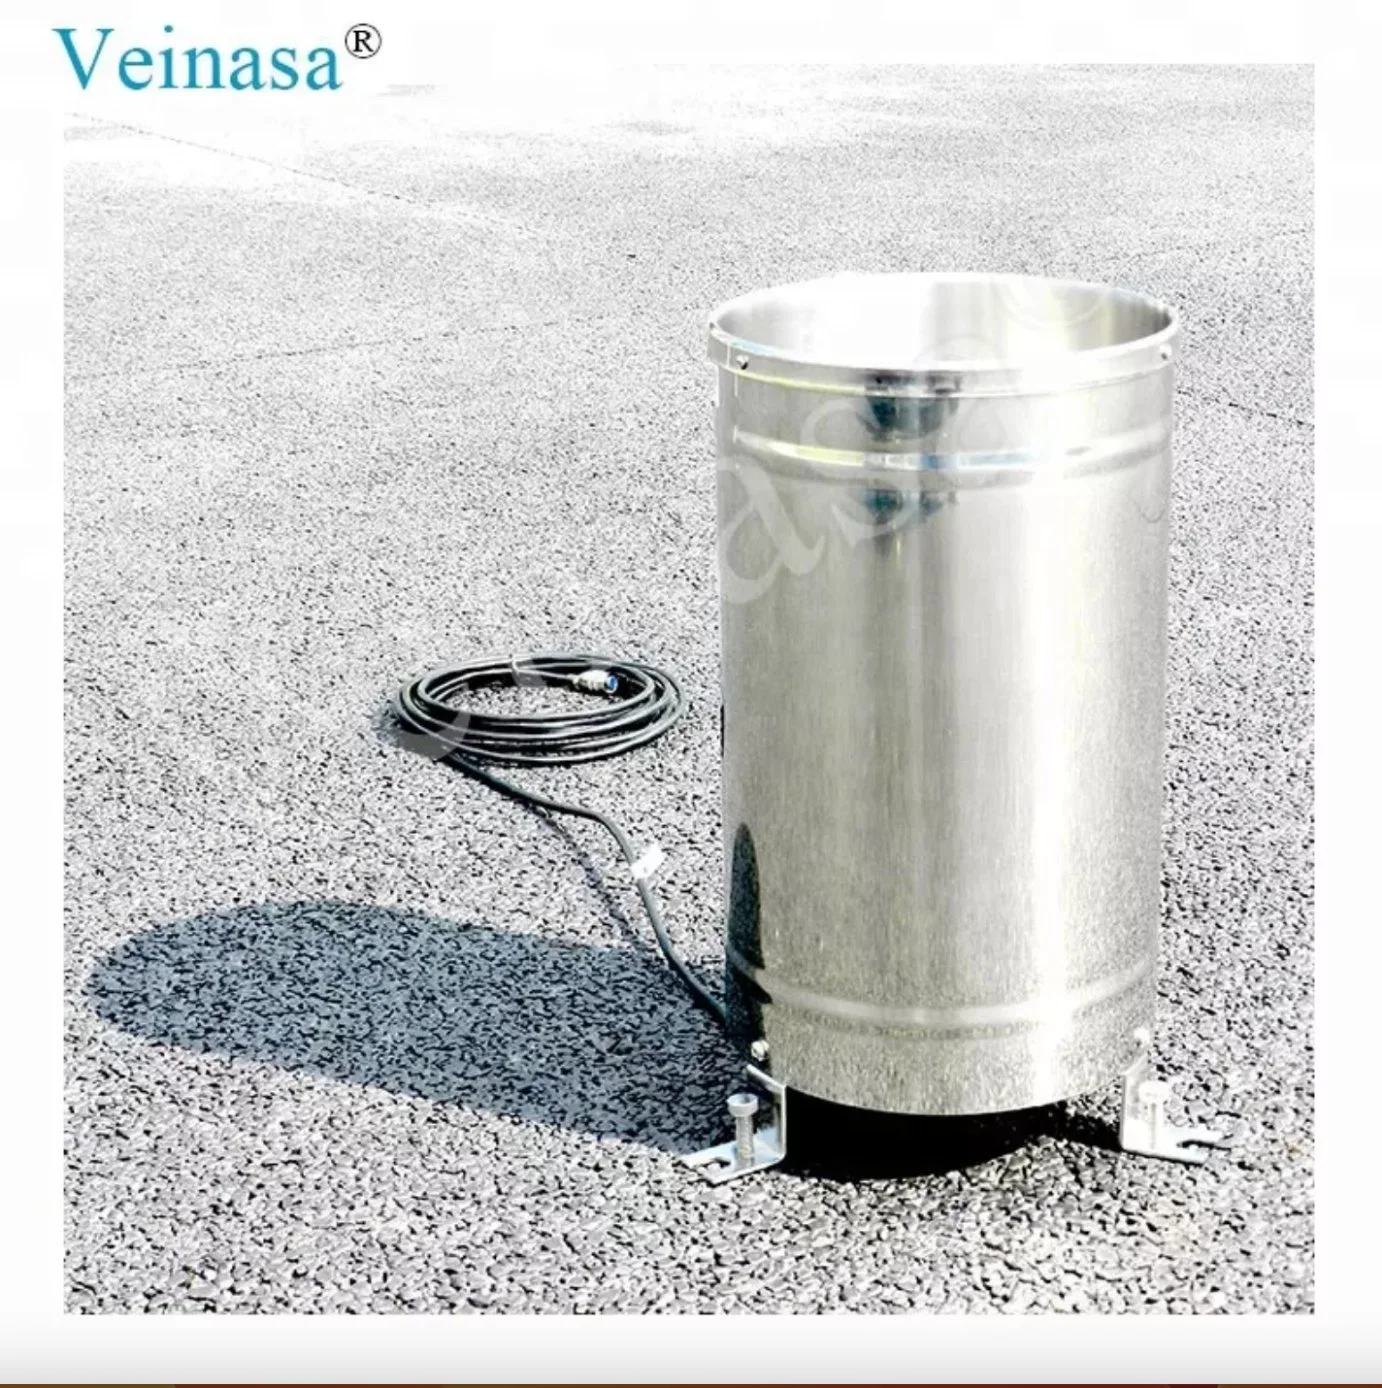 Veinasa-Yl Auto Rain Station Greenhouse Used Sensor Precipitation